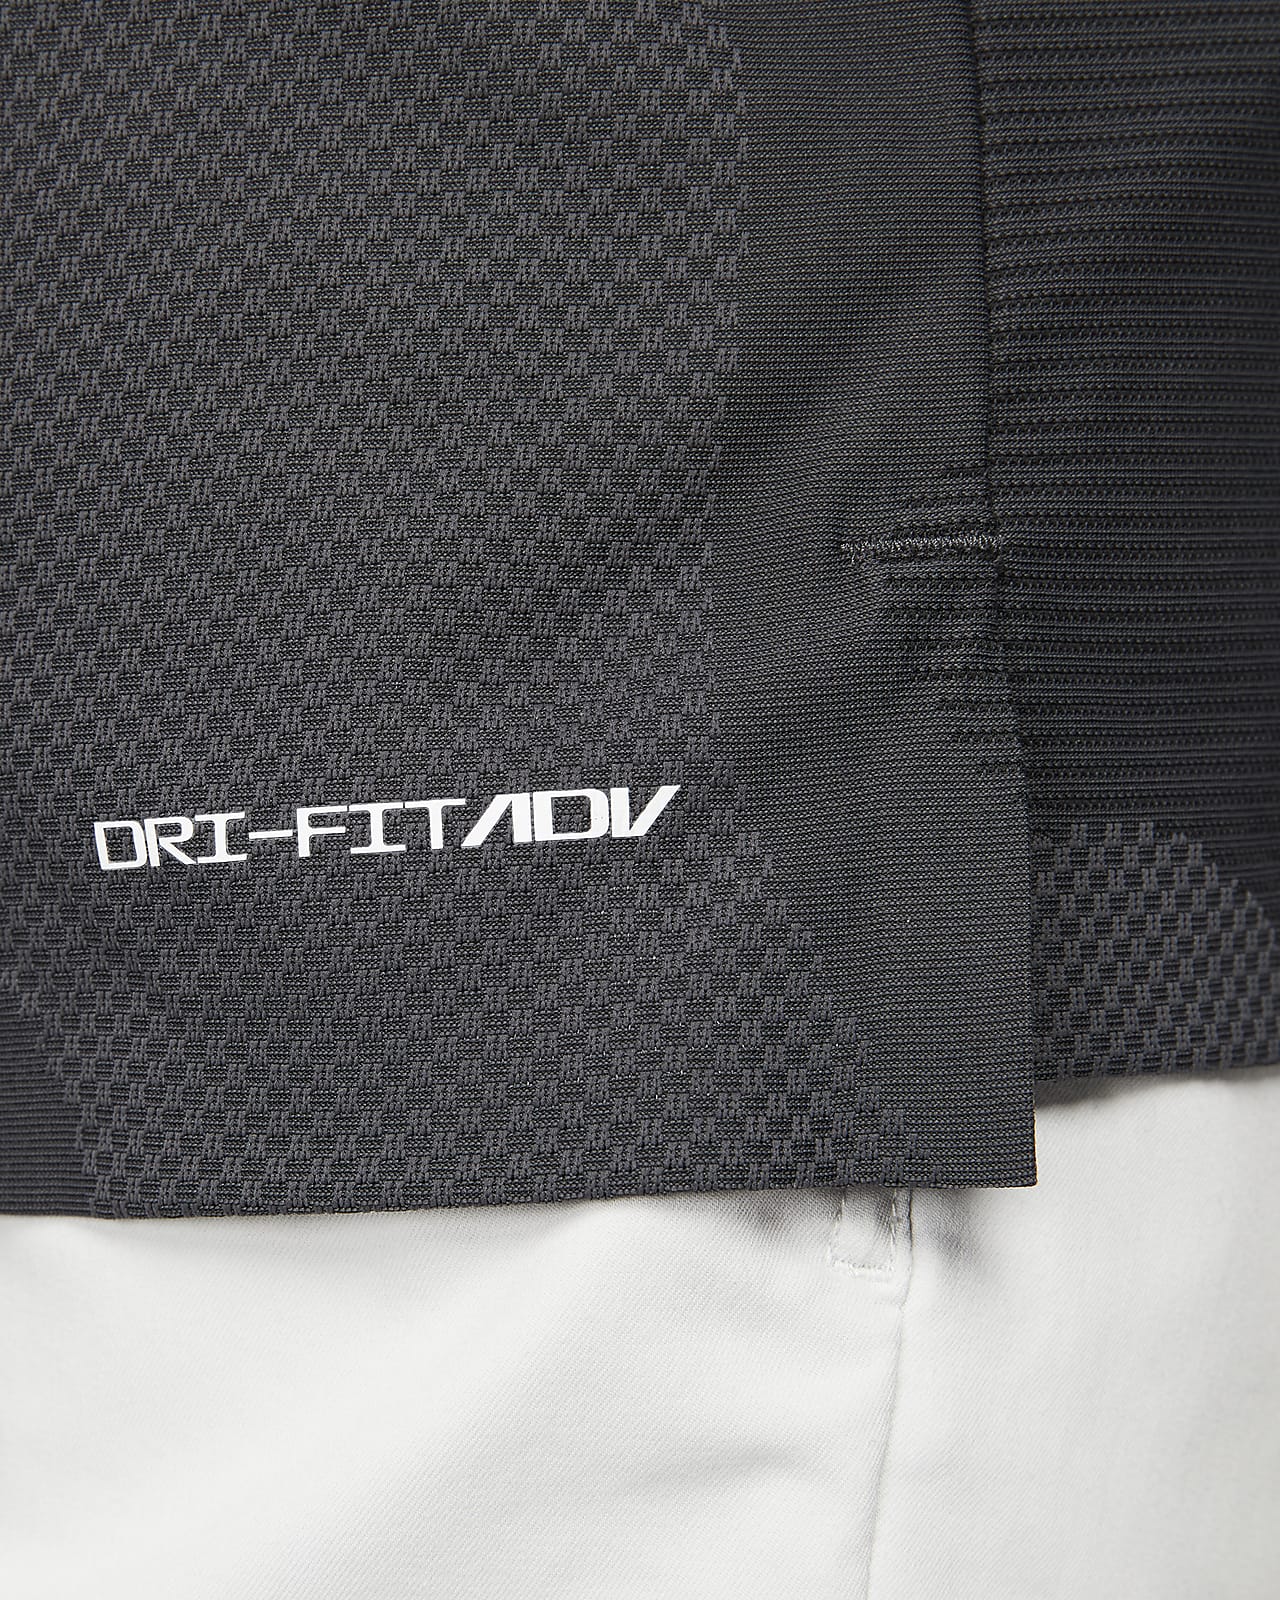 Nike Dri-FIT ADV Tour Men's Camo Golf Polo